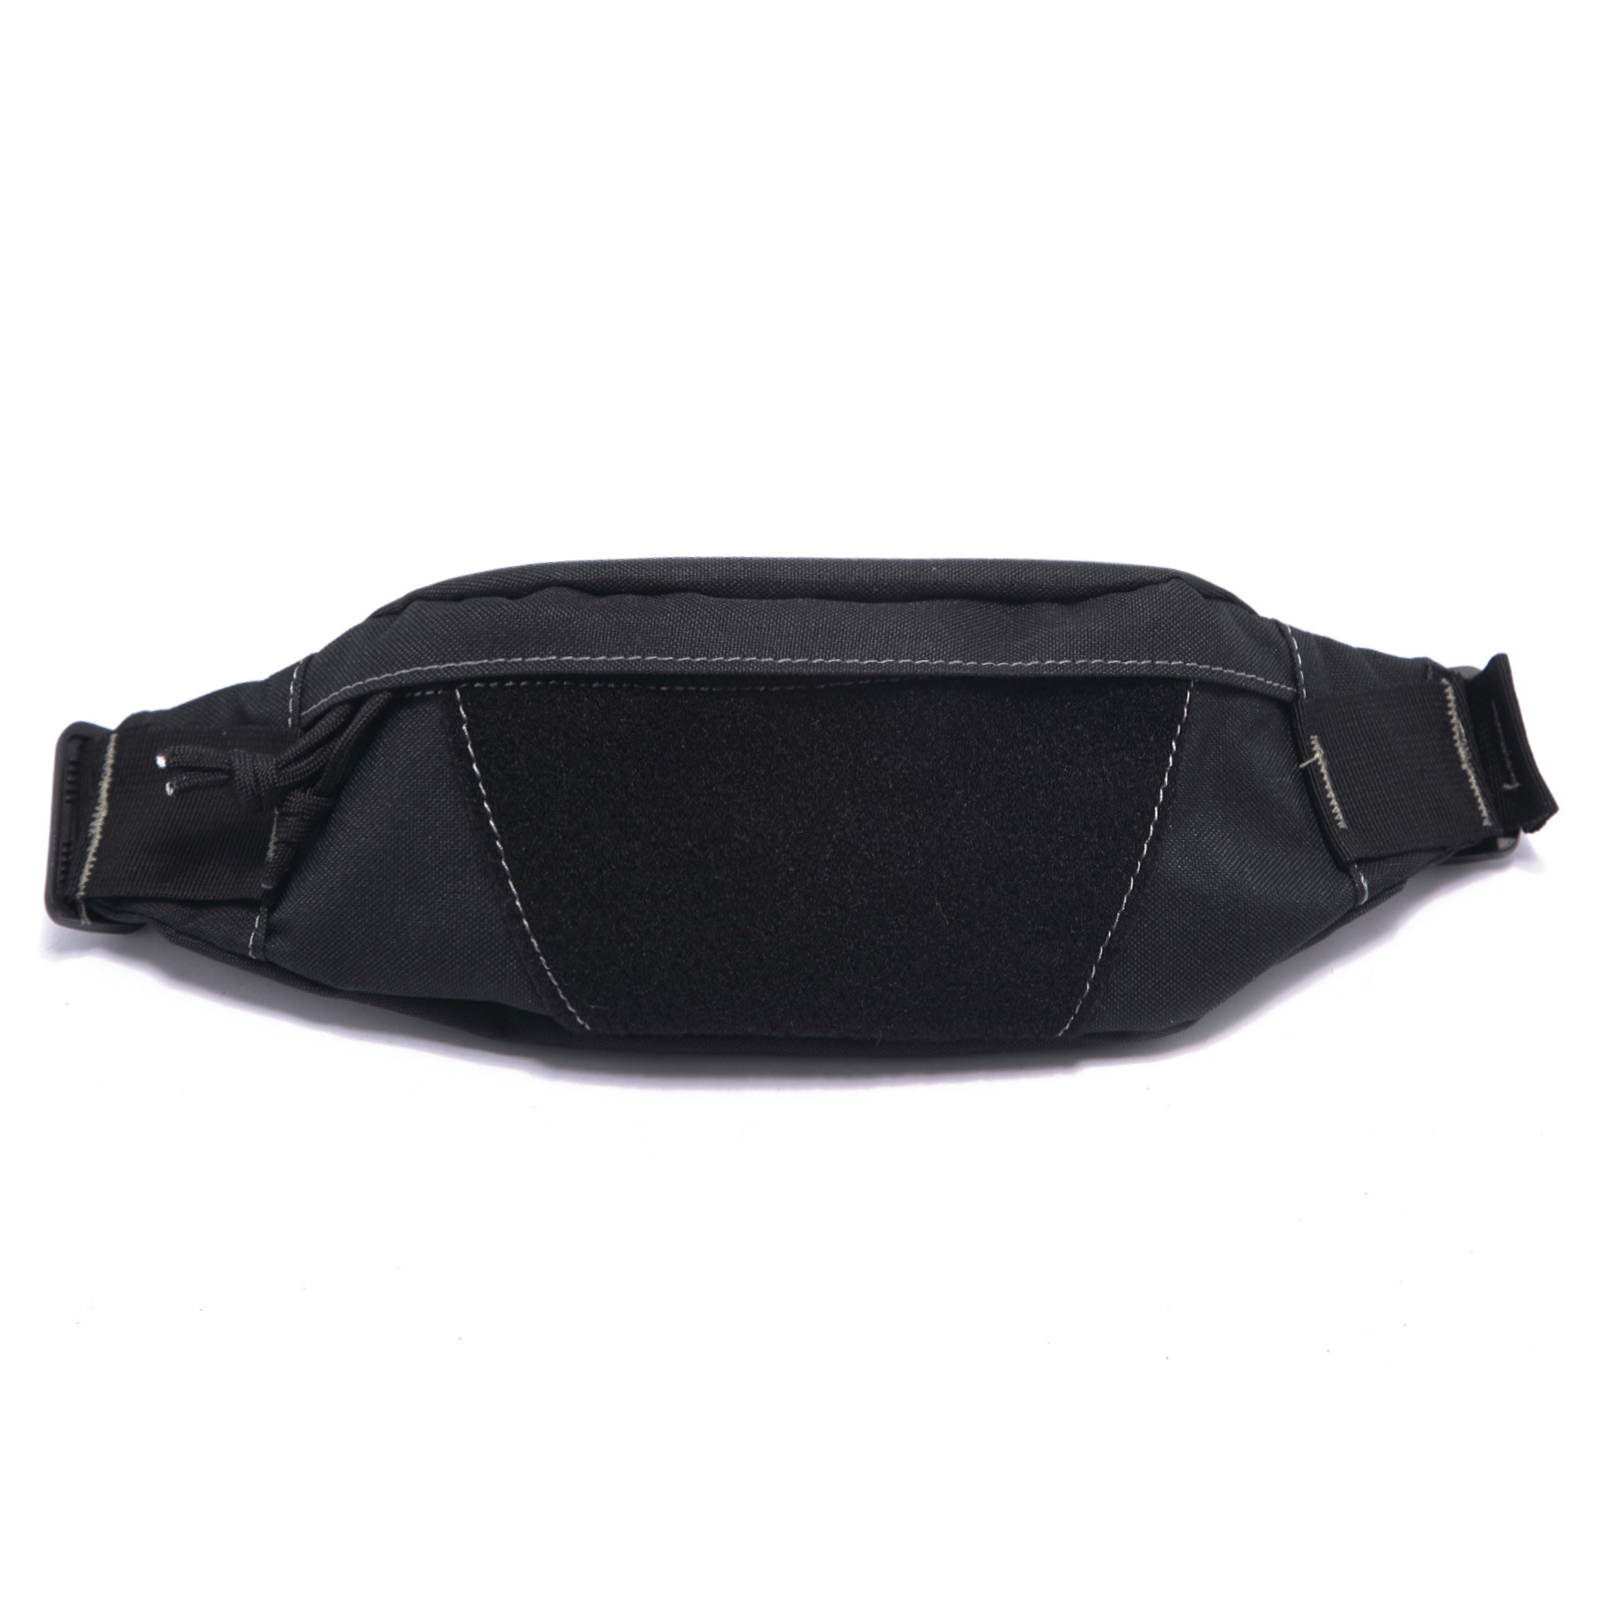 Camouflage-Tactical-Waist-Bag-Cross-Bag-Tactical-Waist-Bag-Outdoor-Fitness-Leisure-Bag-1568909-3